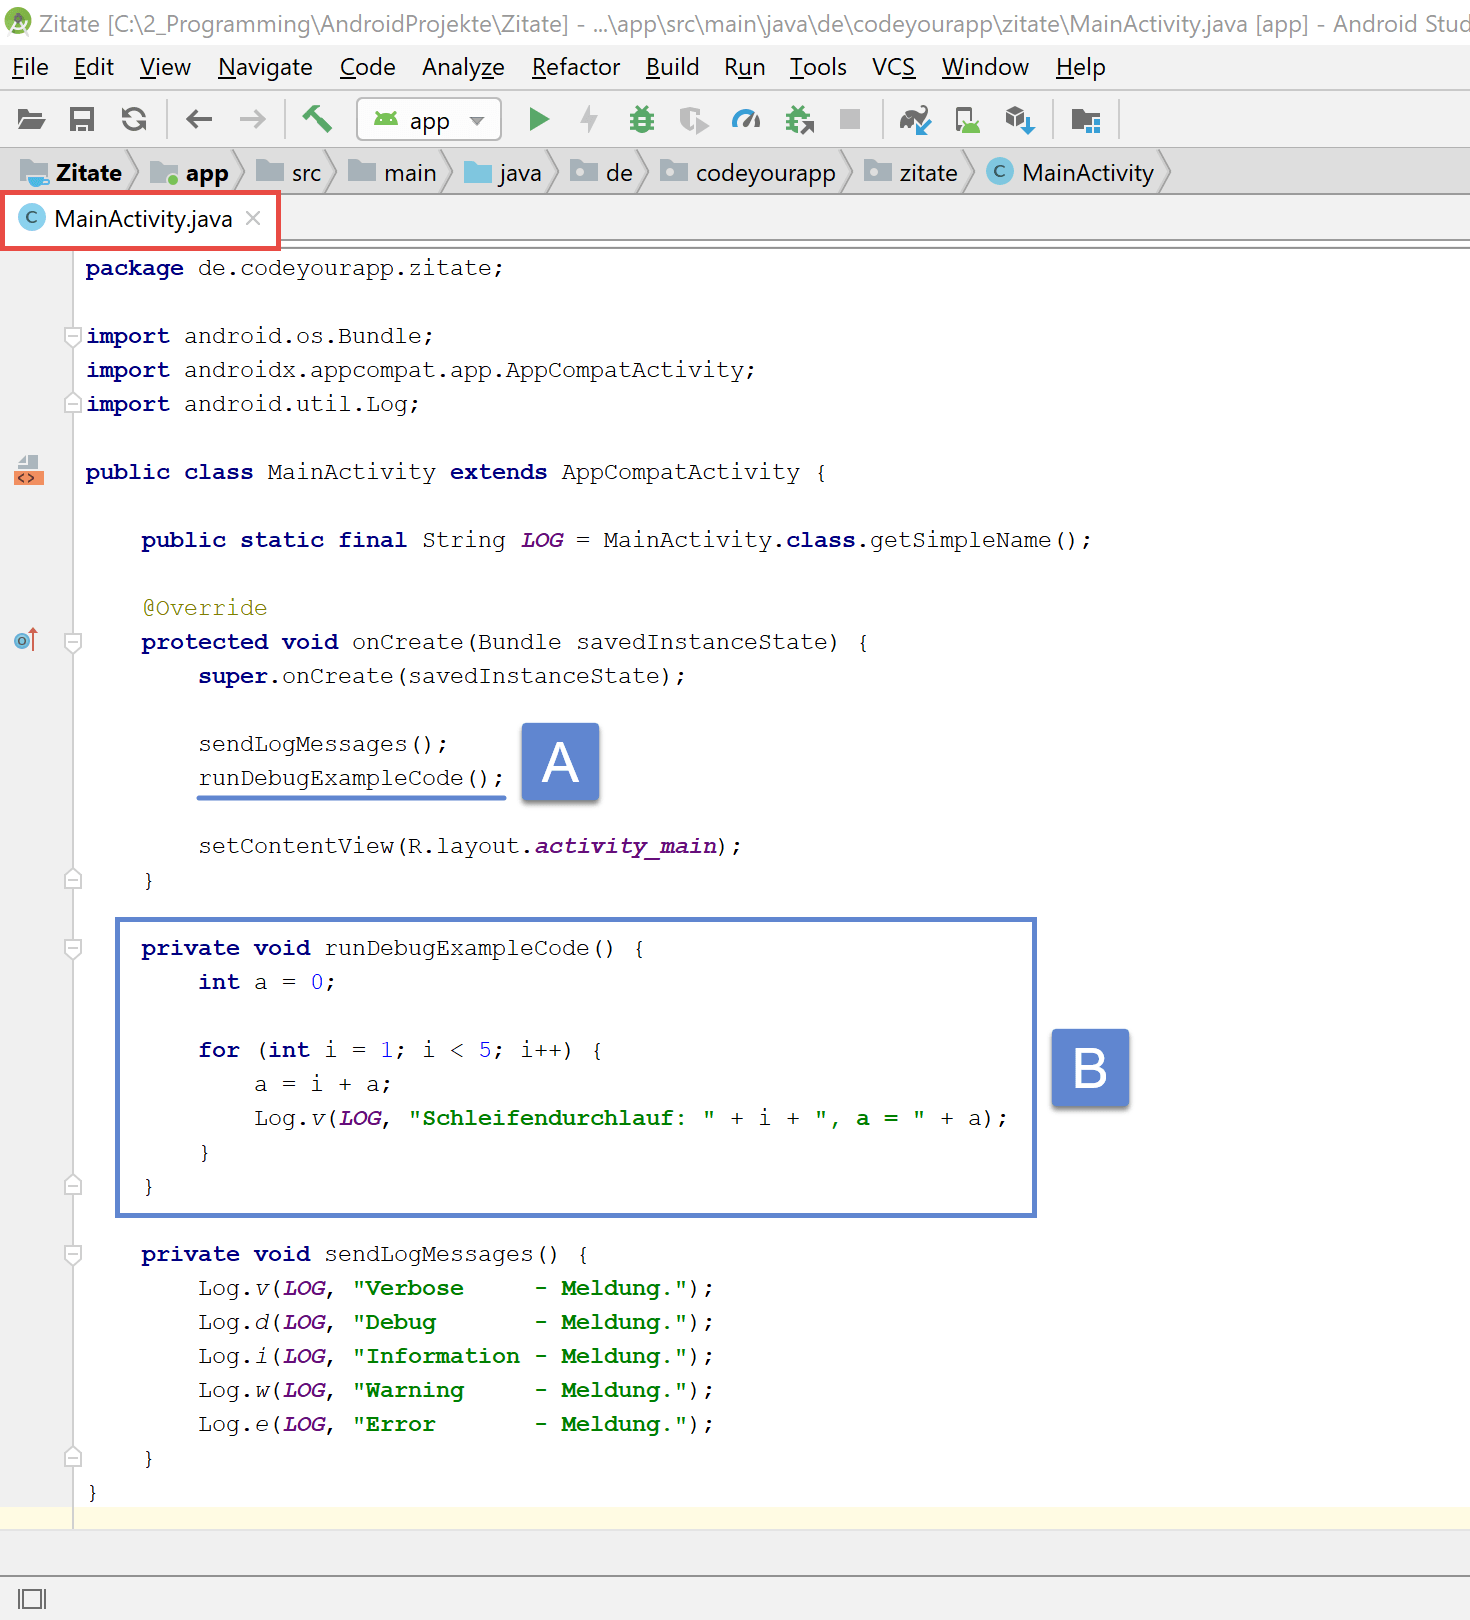 debugging_example_code